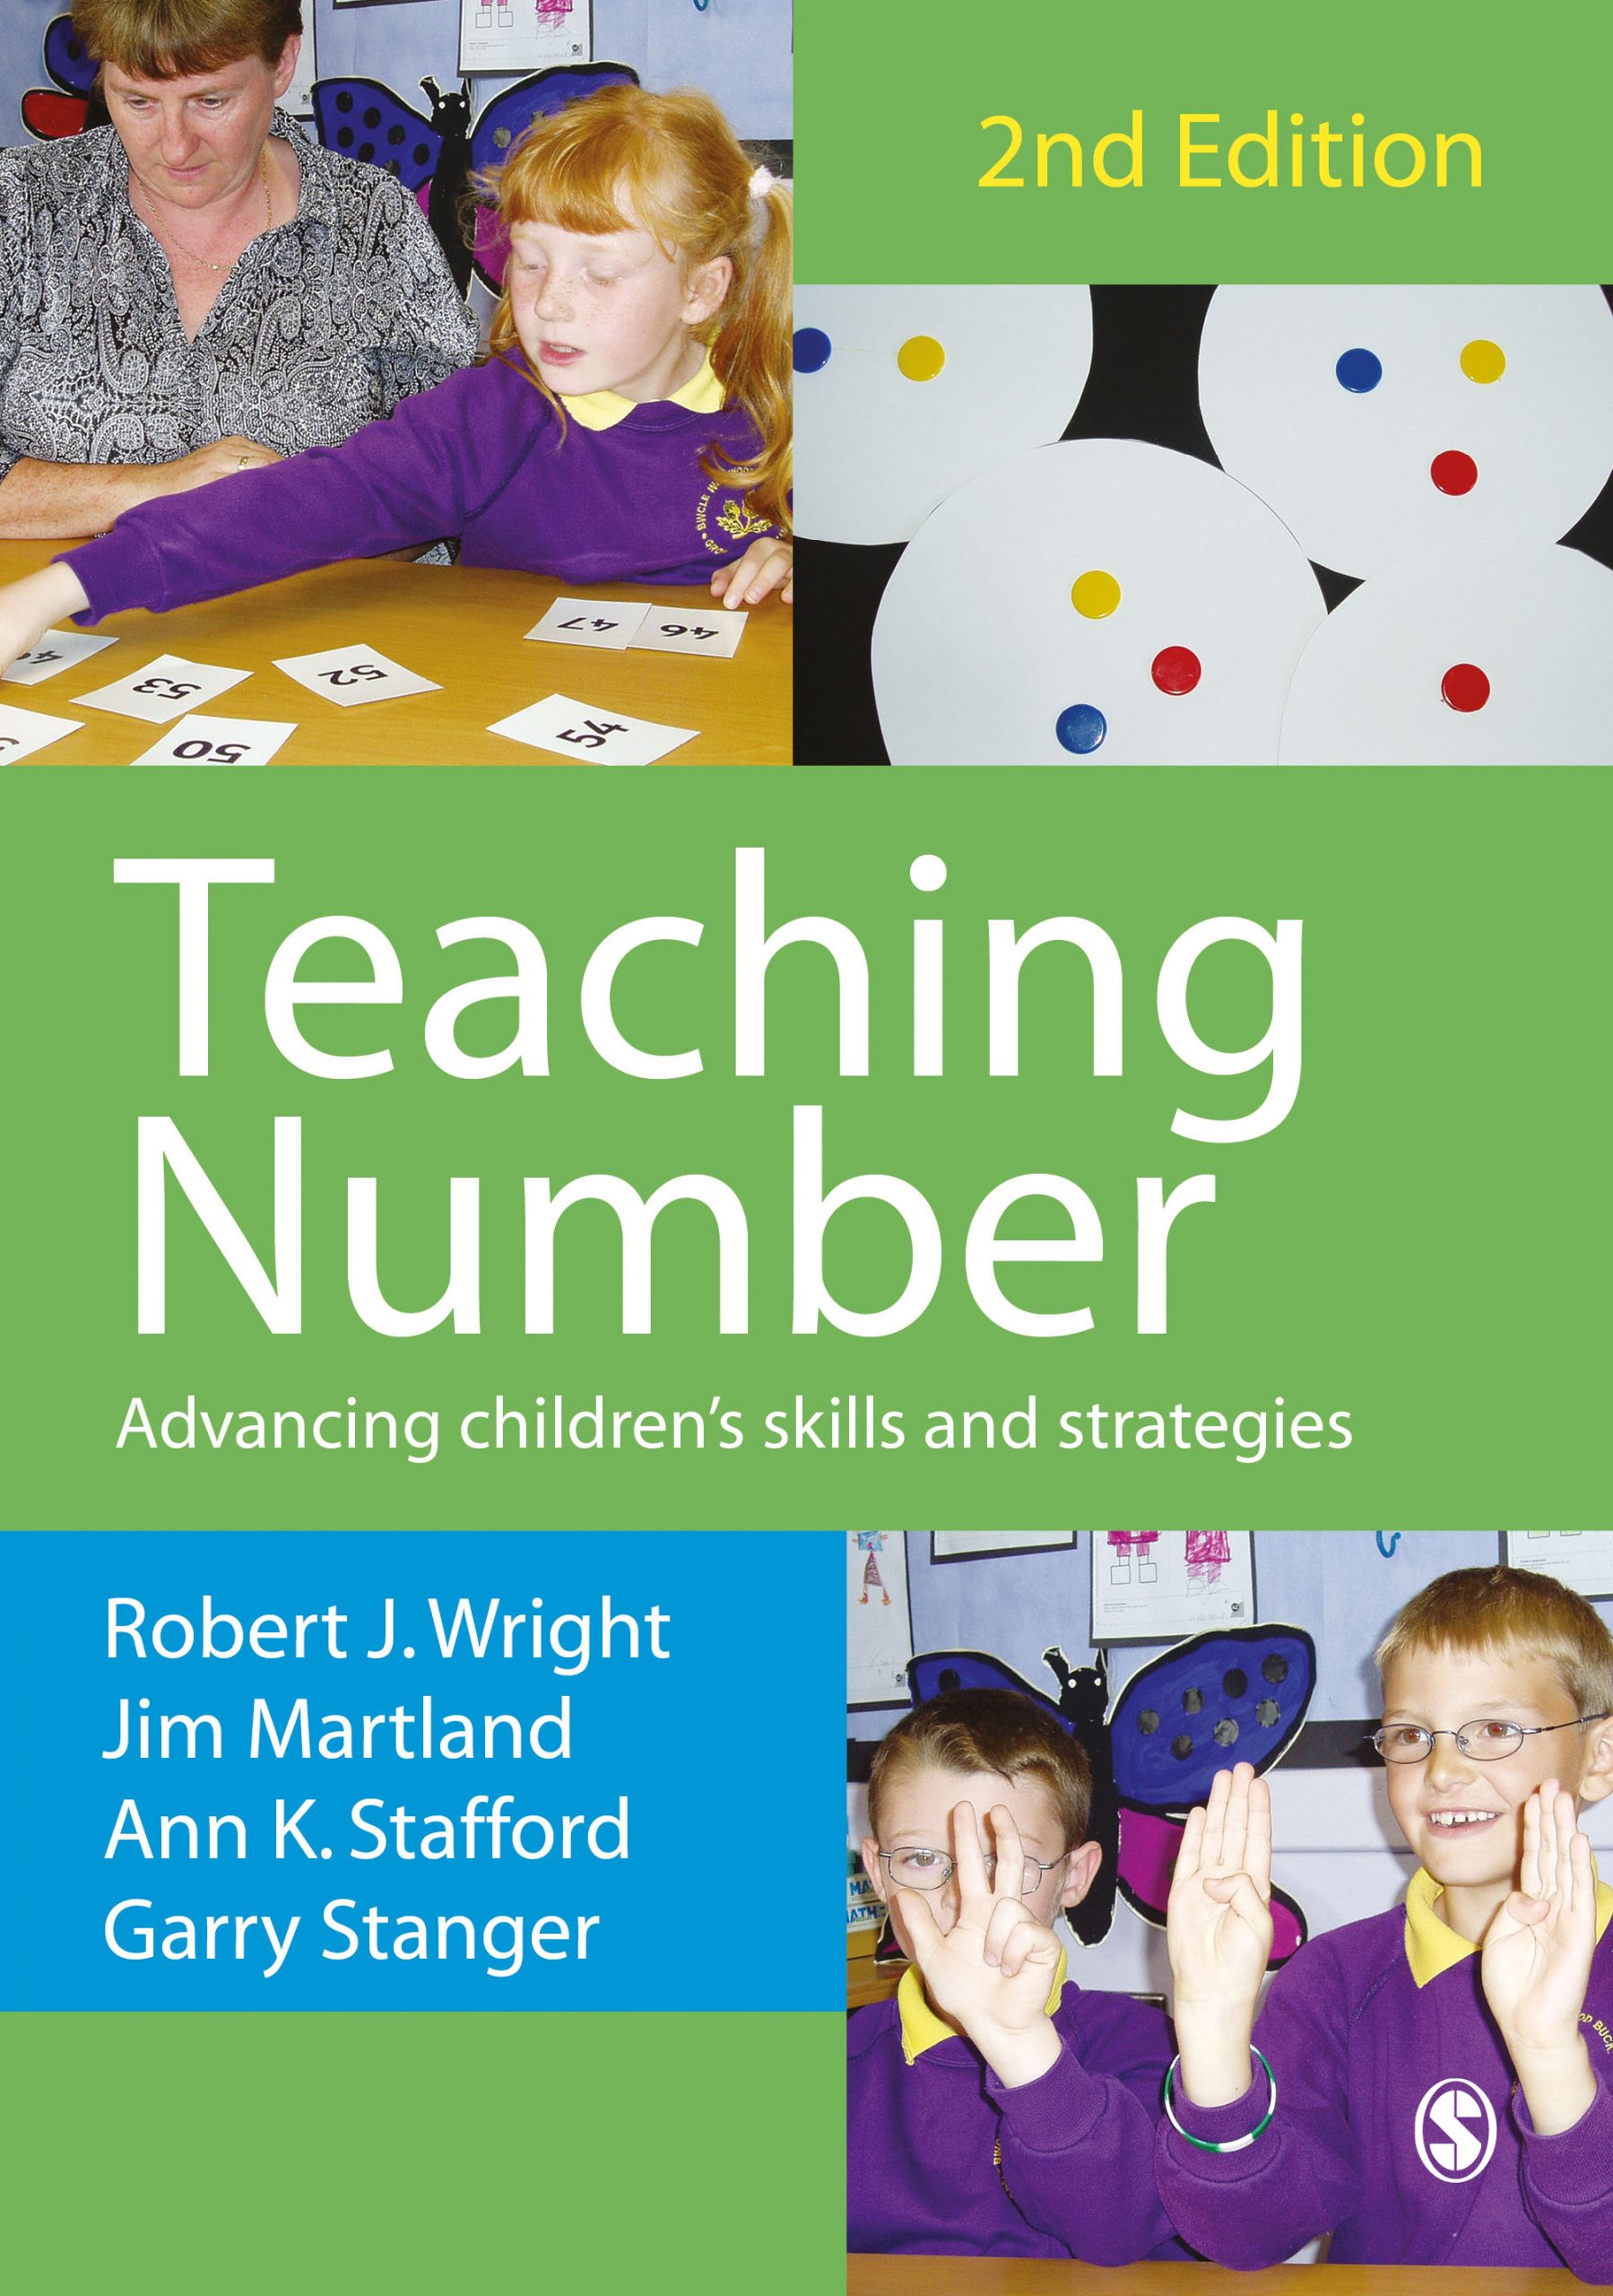   Teaching Number: Advancing Children’s Skills and Strategies